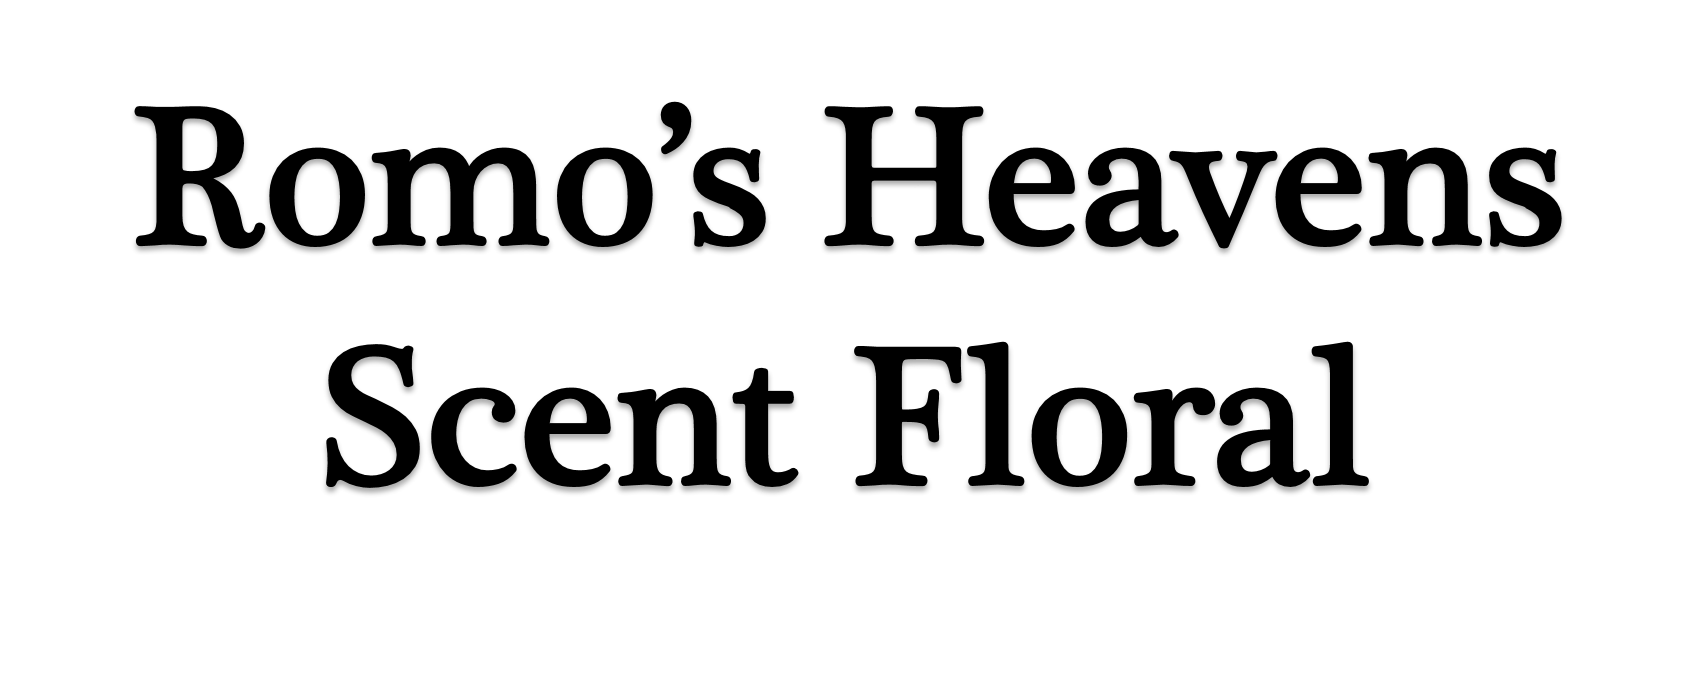 Scent Flower Shop Logo - Bakersfield Florist - Flower Delivery by Romo's Heavens Scent Floral